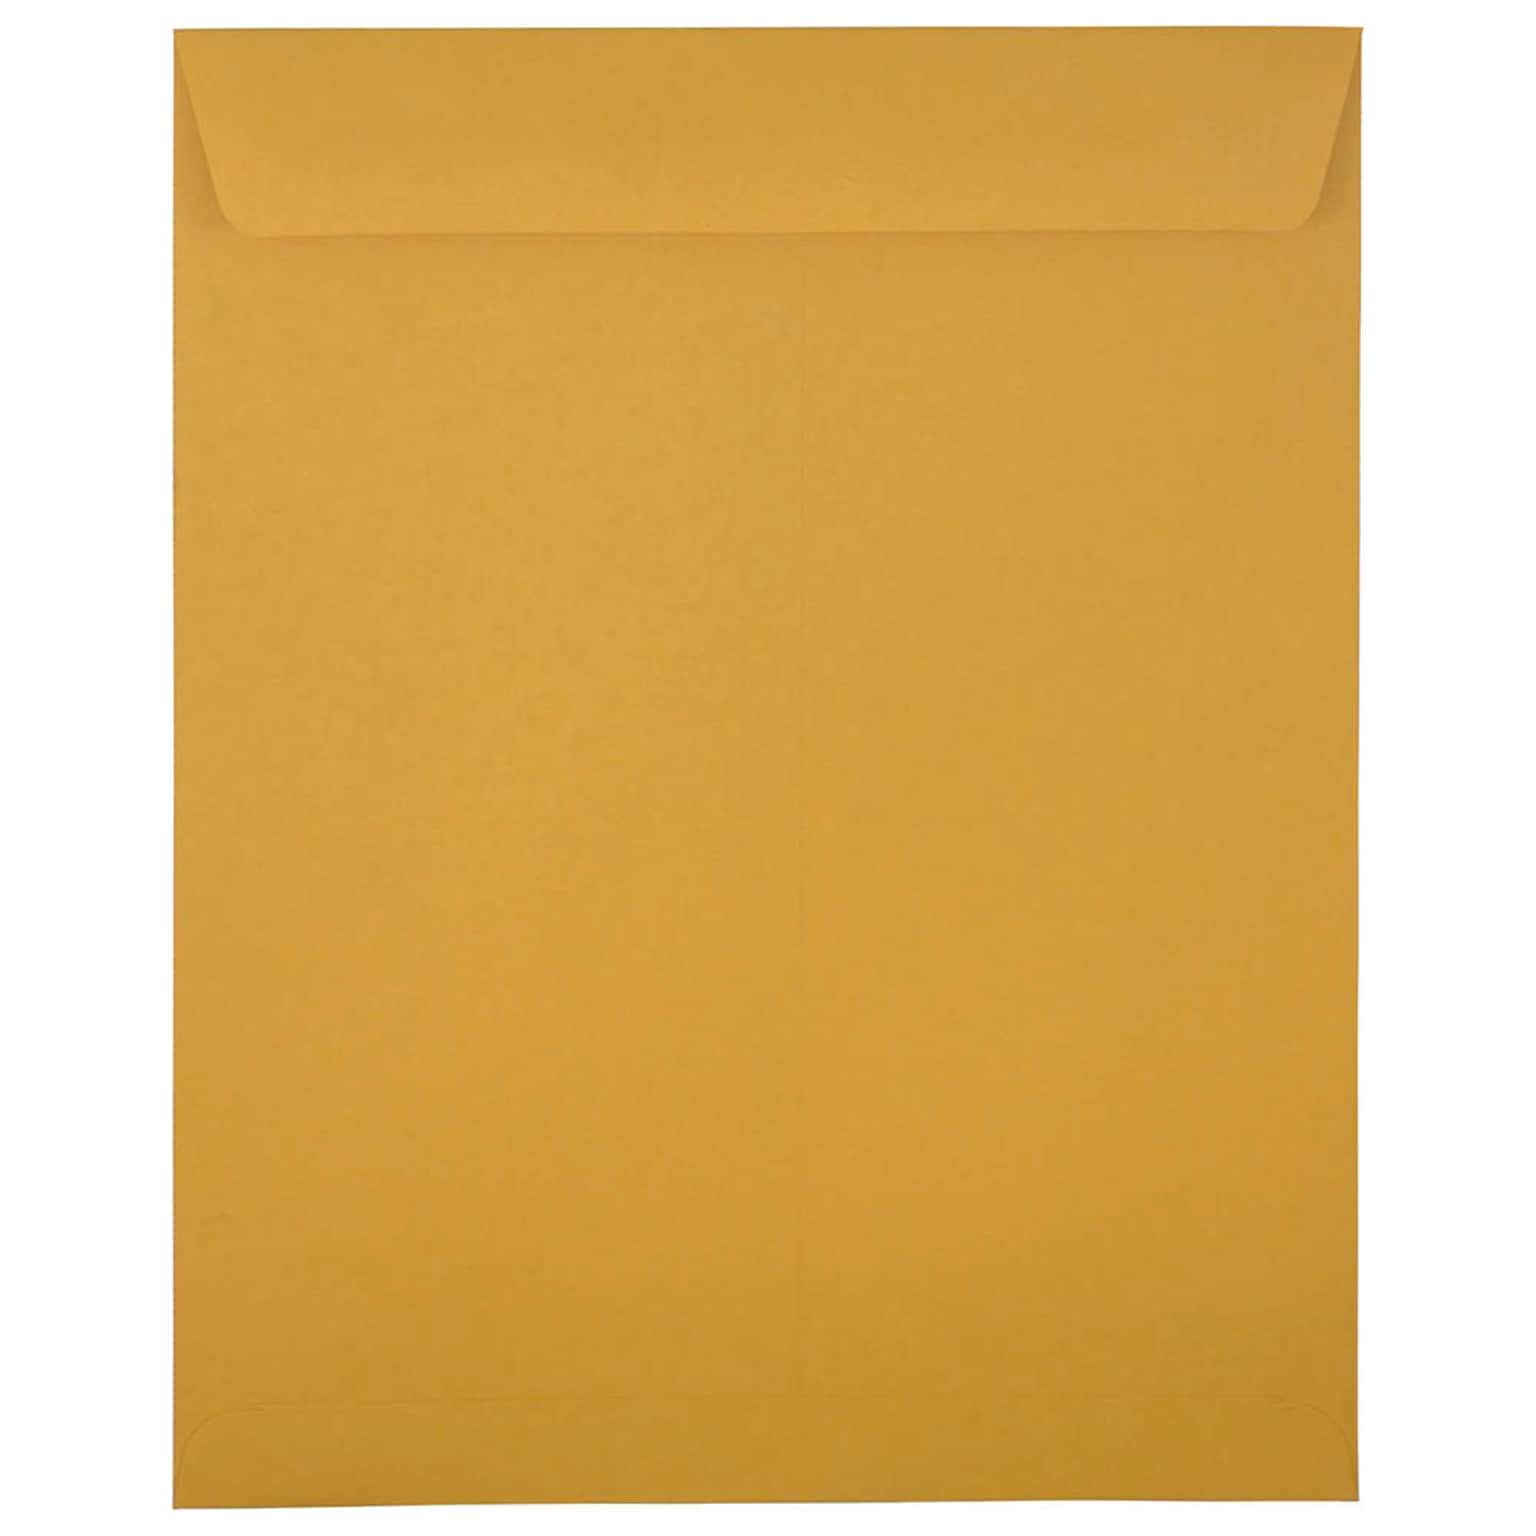 JAM Paper Open End Catalog Envelope, 11 1/2 x 14 1/2, Brown, 100/Pack (313011452)